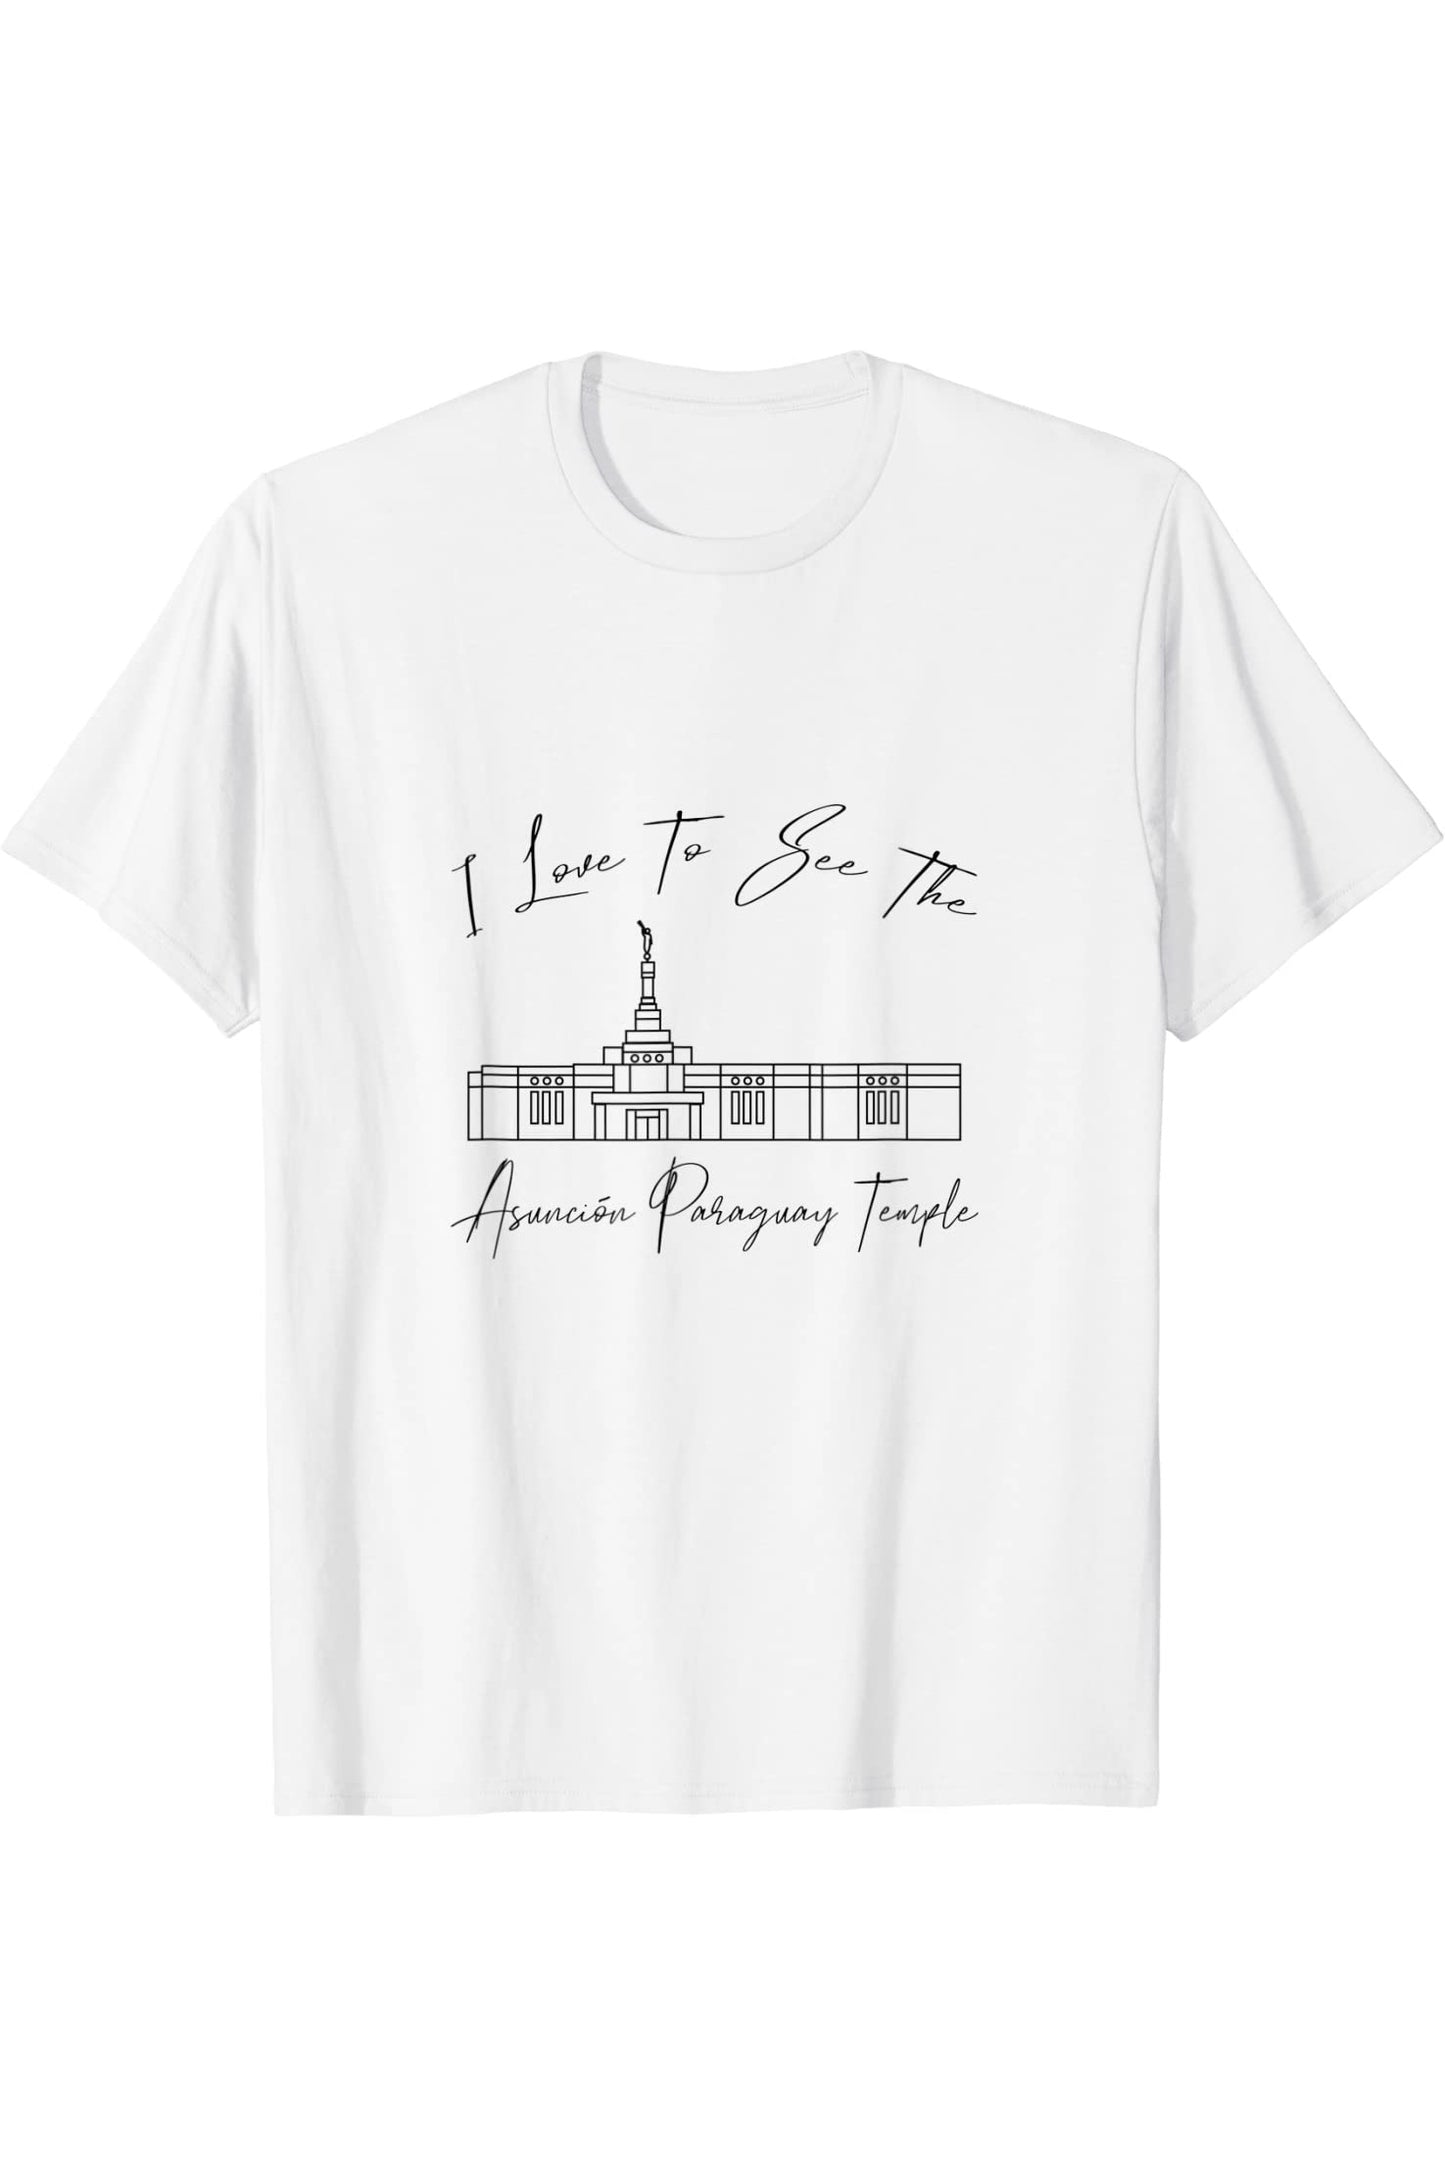 Asuncion Paraguay Temple T-Shirt - Calligraphy Style (English) US